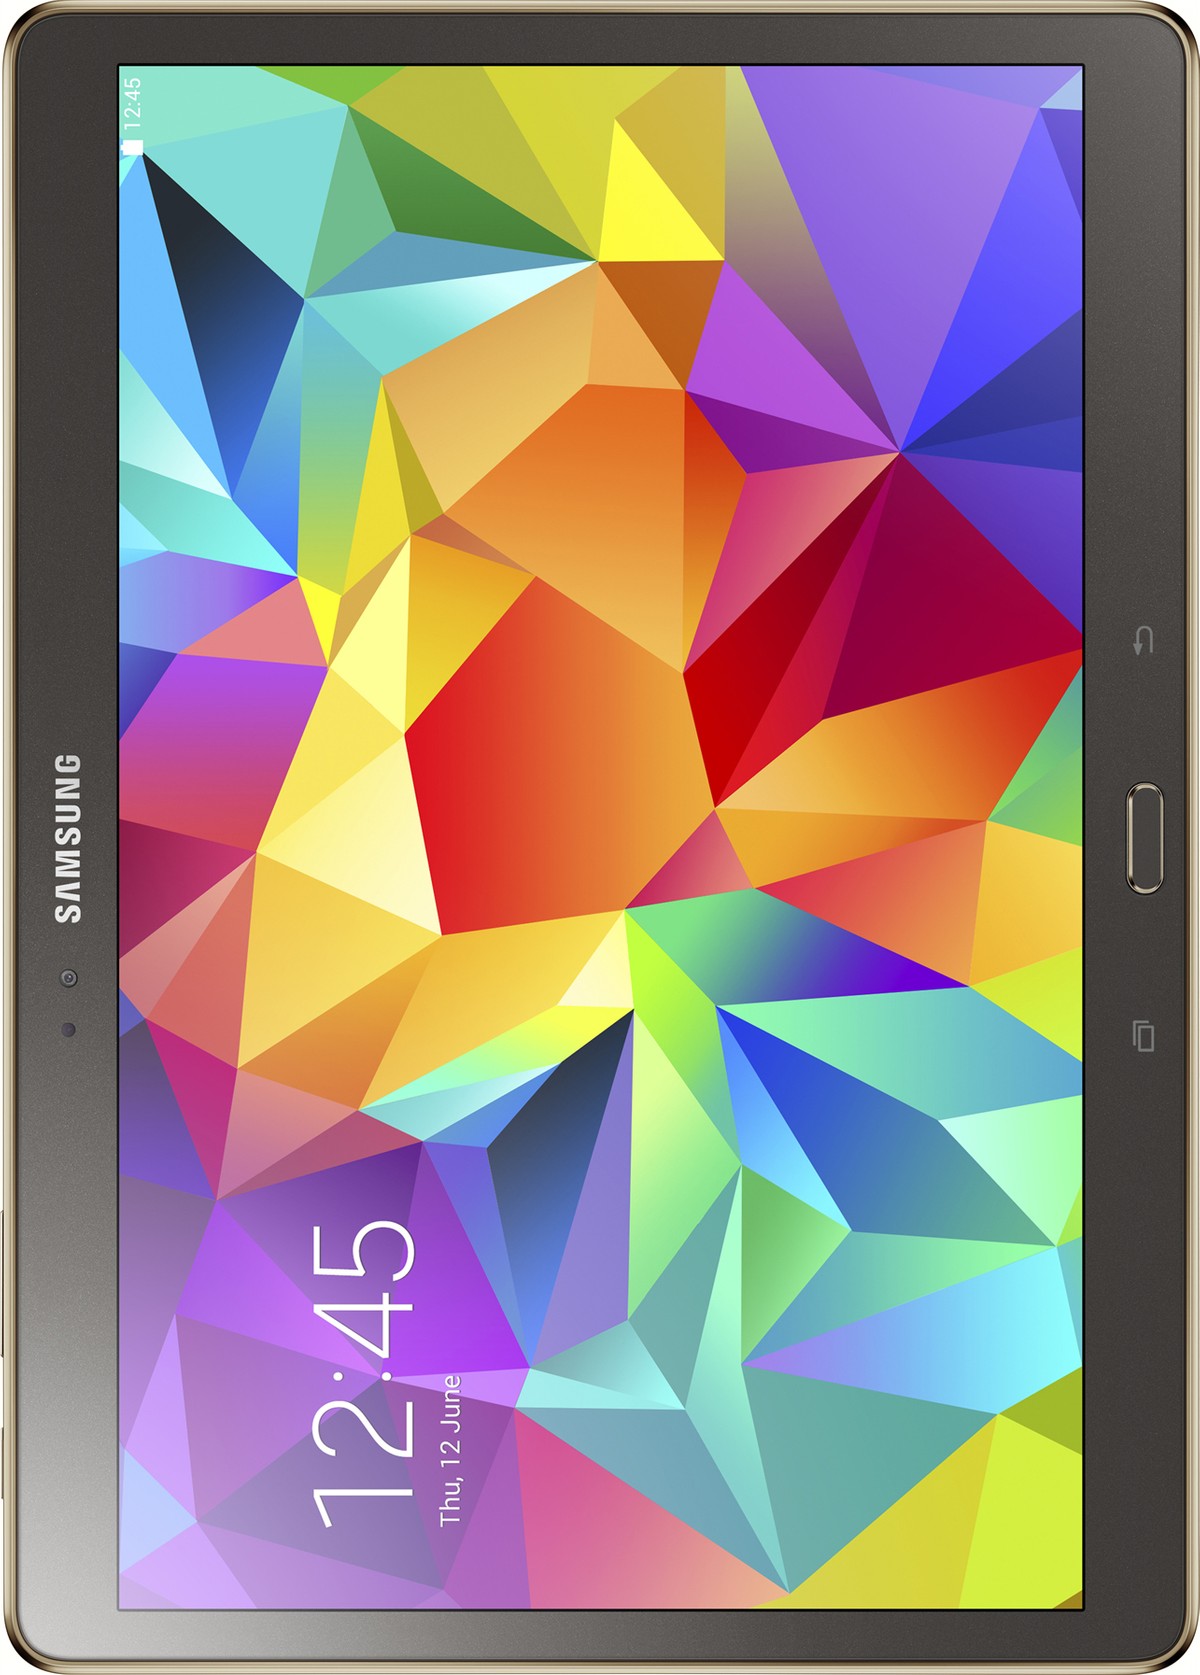 Galaxy Tab S 10.5 (U.S. Cellular) Tablets - SM-T807RTSAUSC